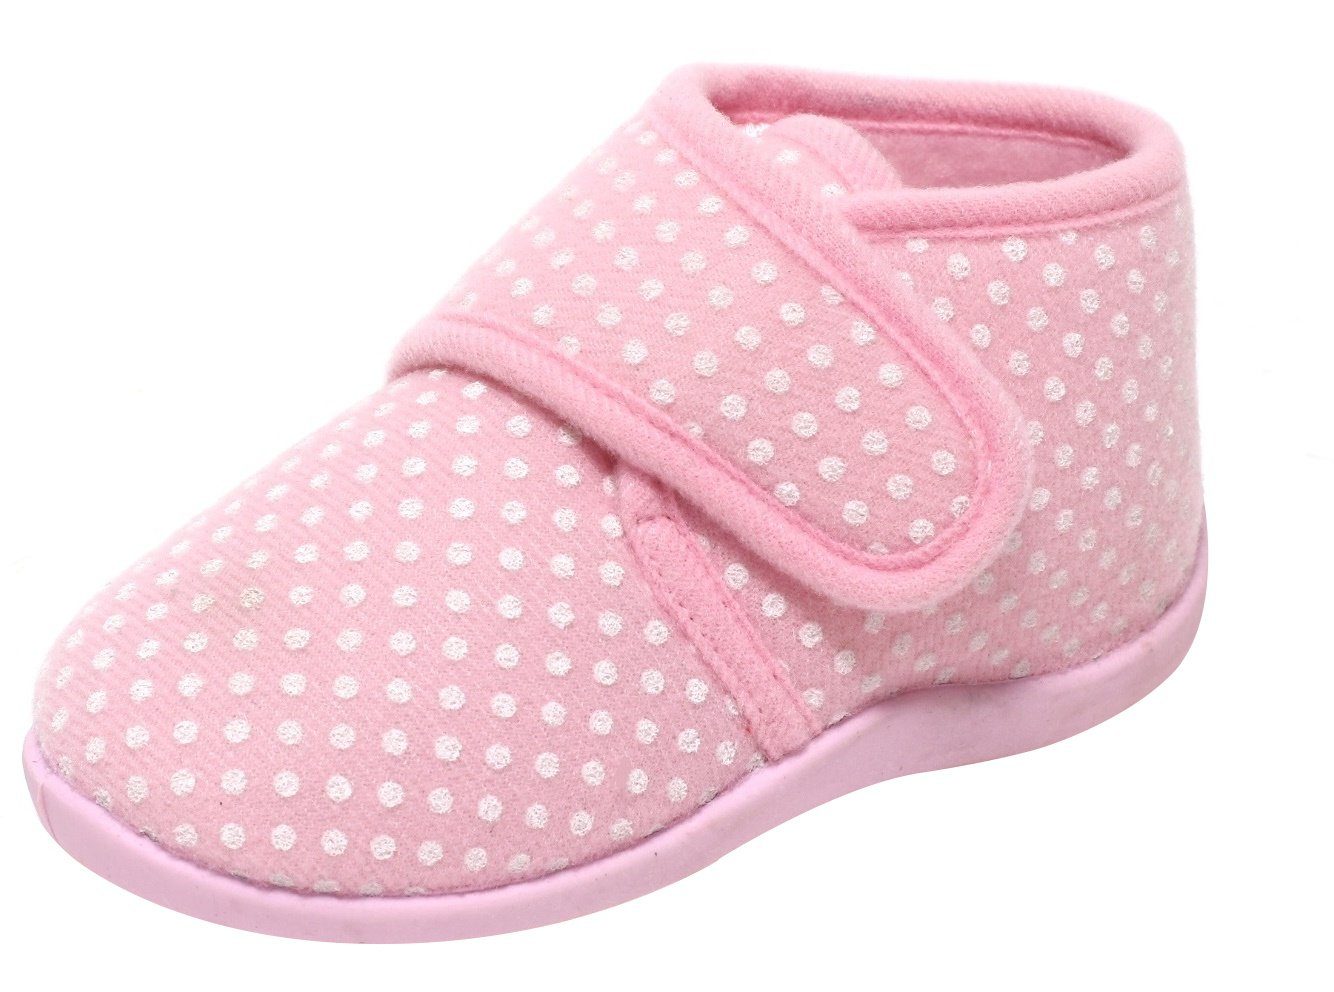 Kinder Kids (Gr. 92 -146) Zapato Hausschuh Mädchen Hausschuhe Kinderschuhe Puschen Slipper Freizeitschuhe Baby Kinder rosa